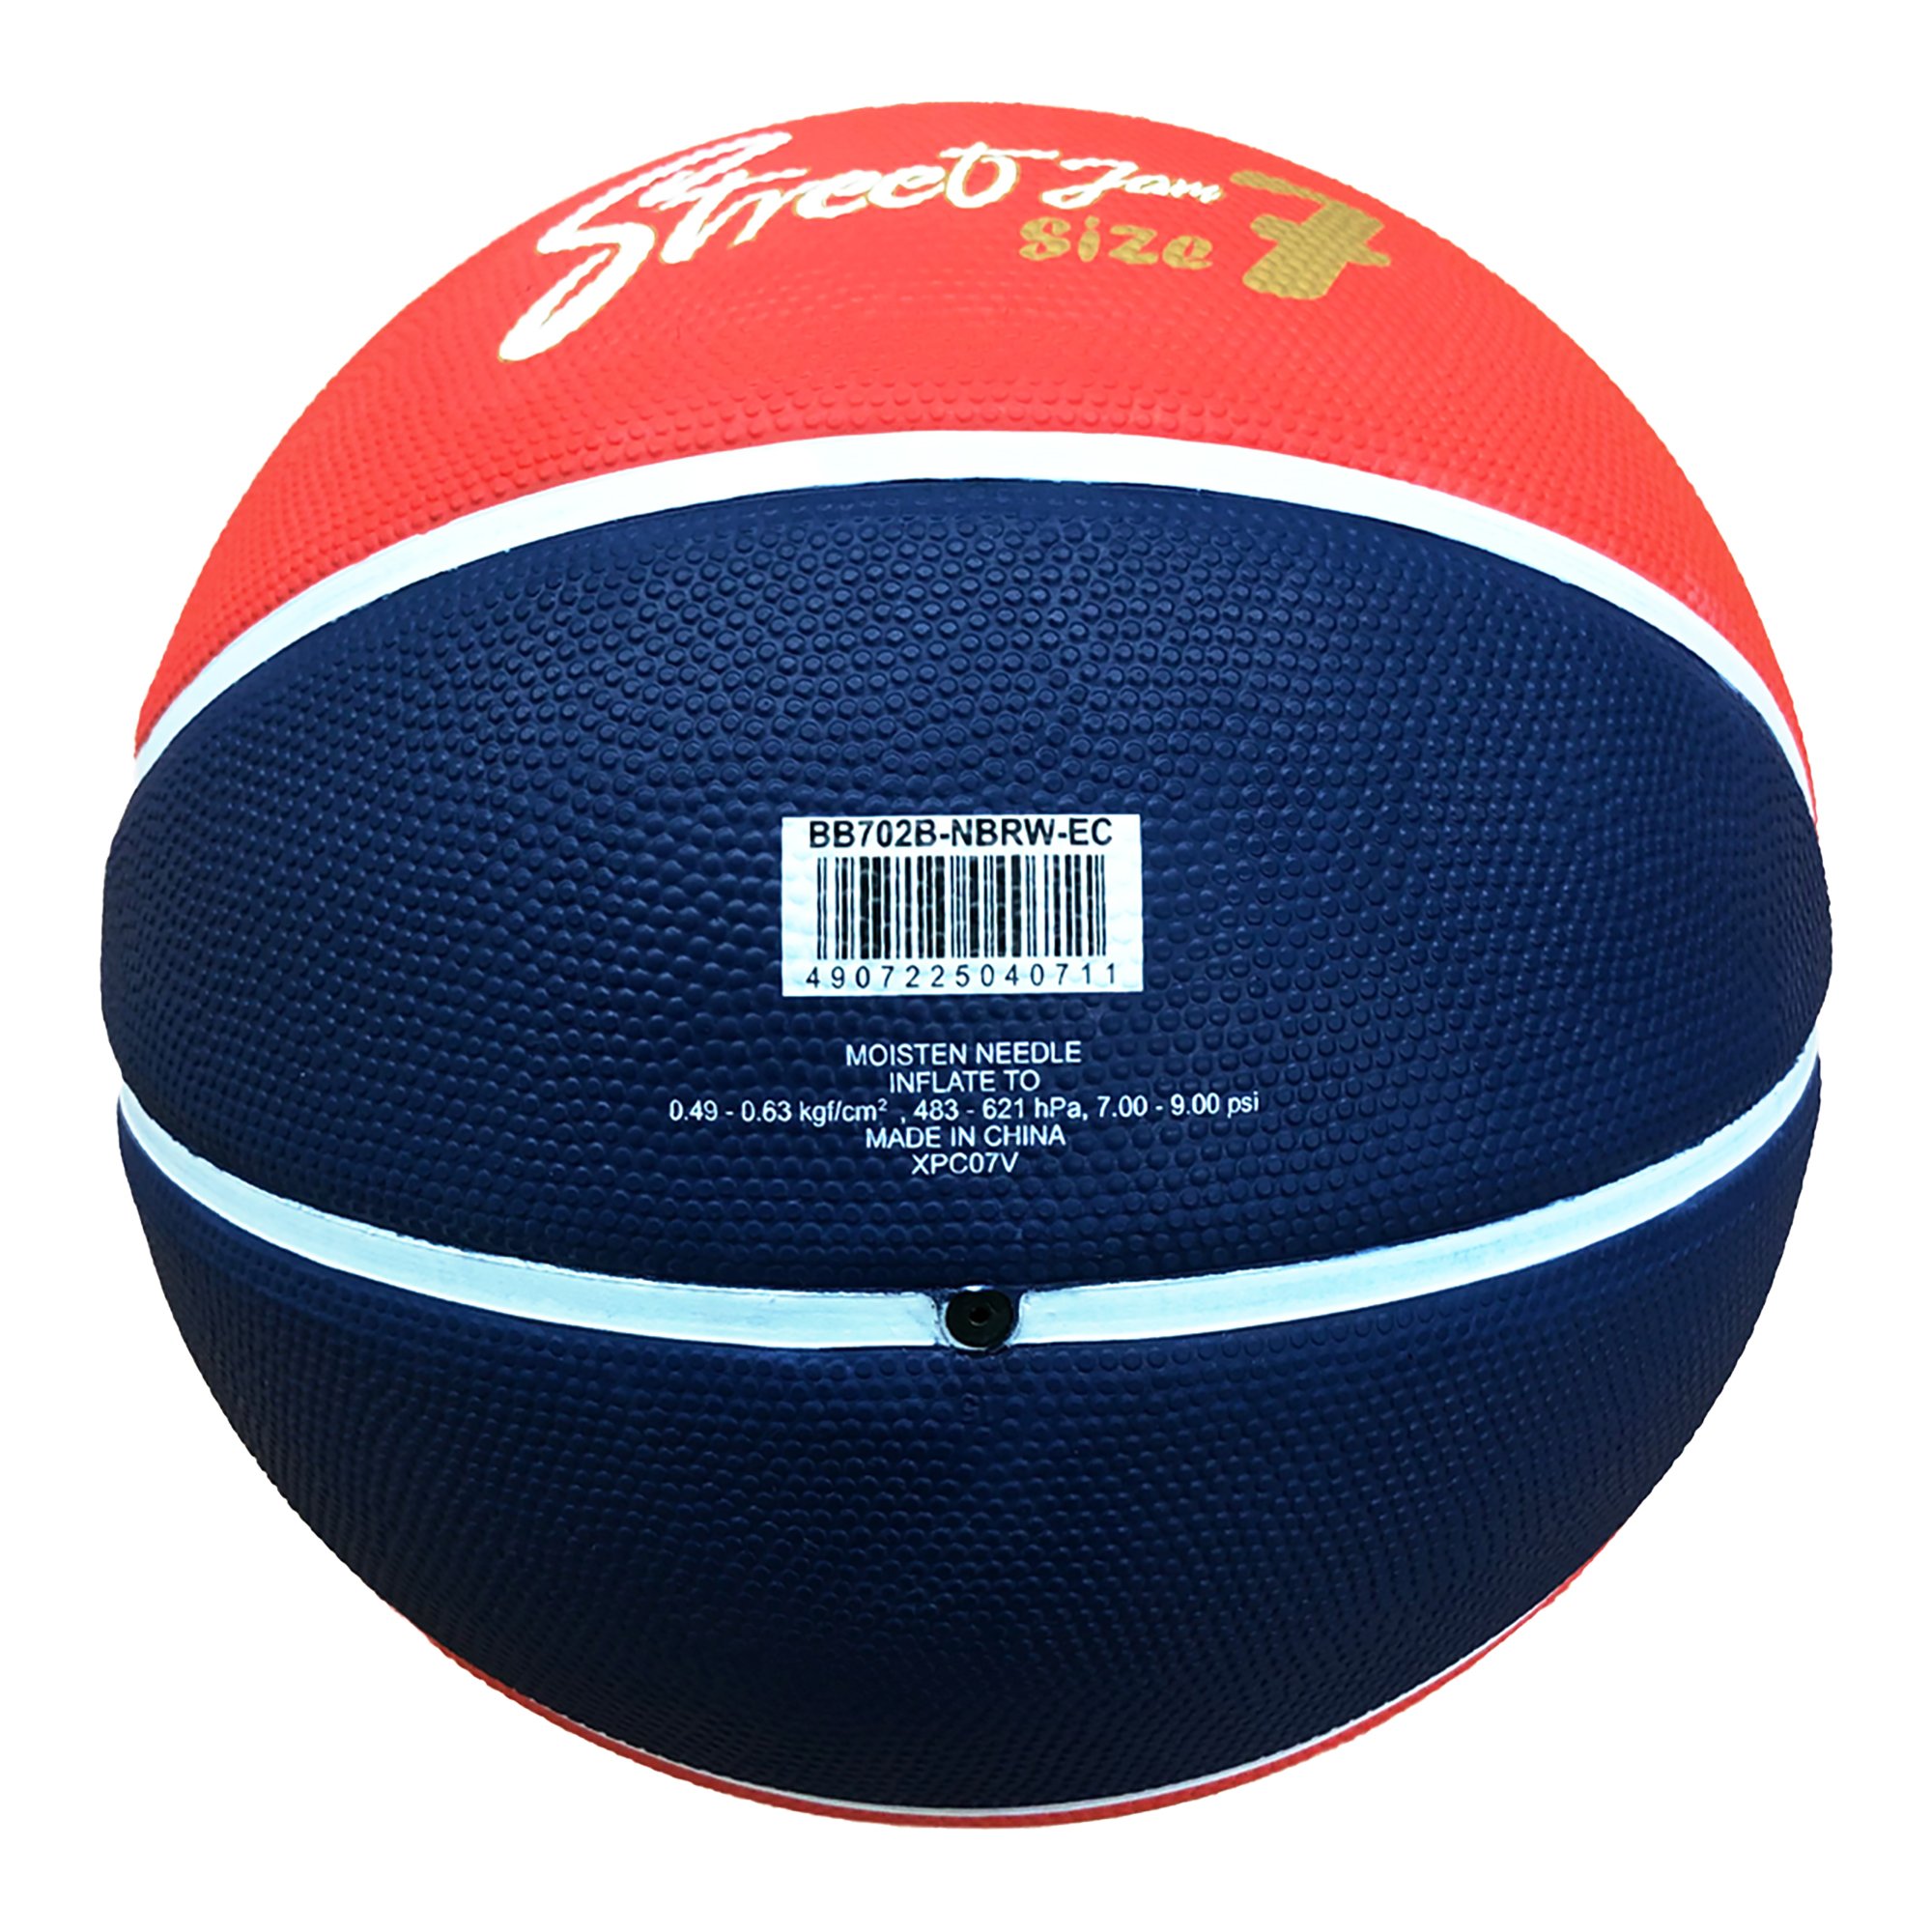 Mikasa Basketball BB702-NBRW